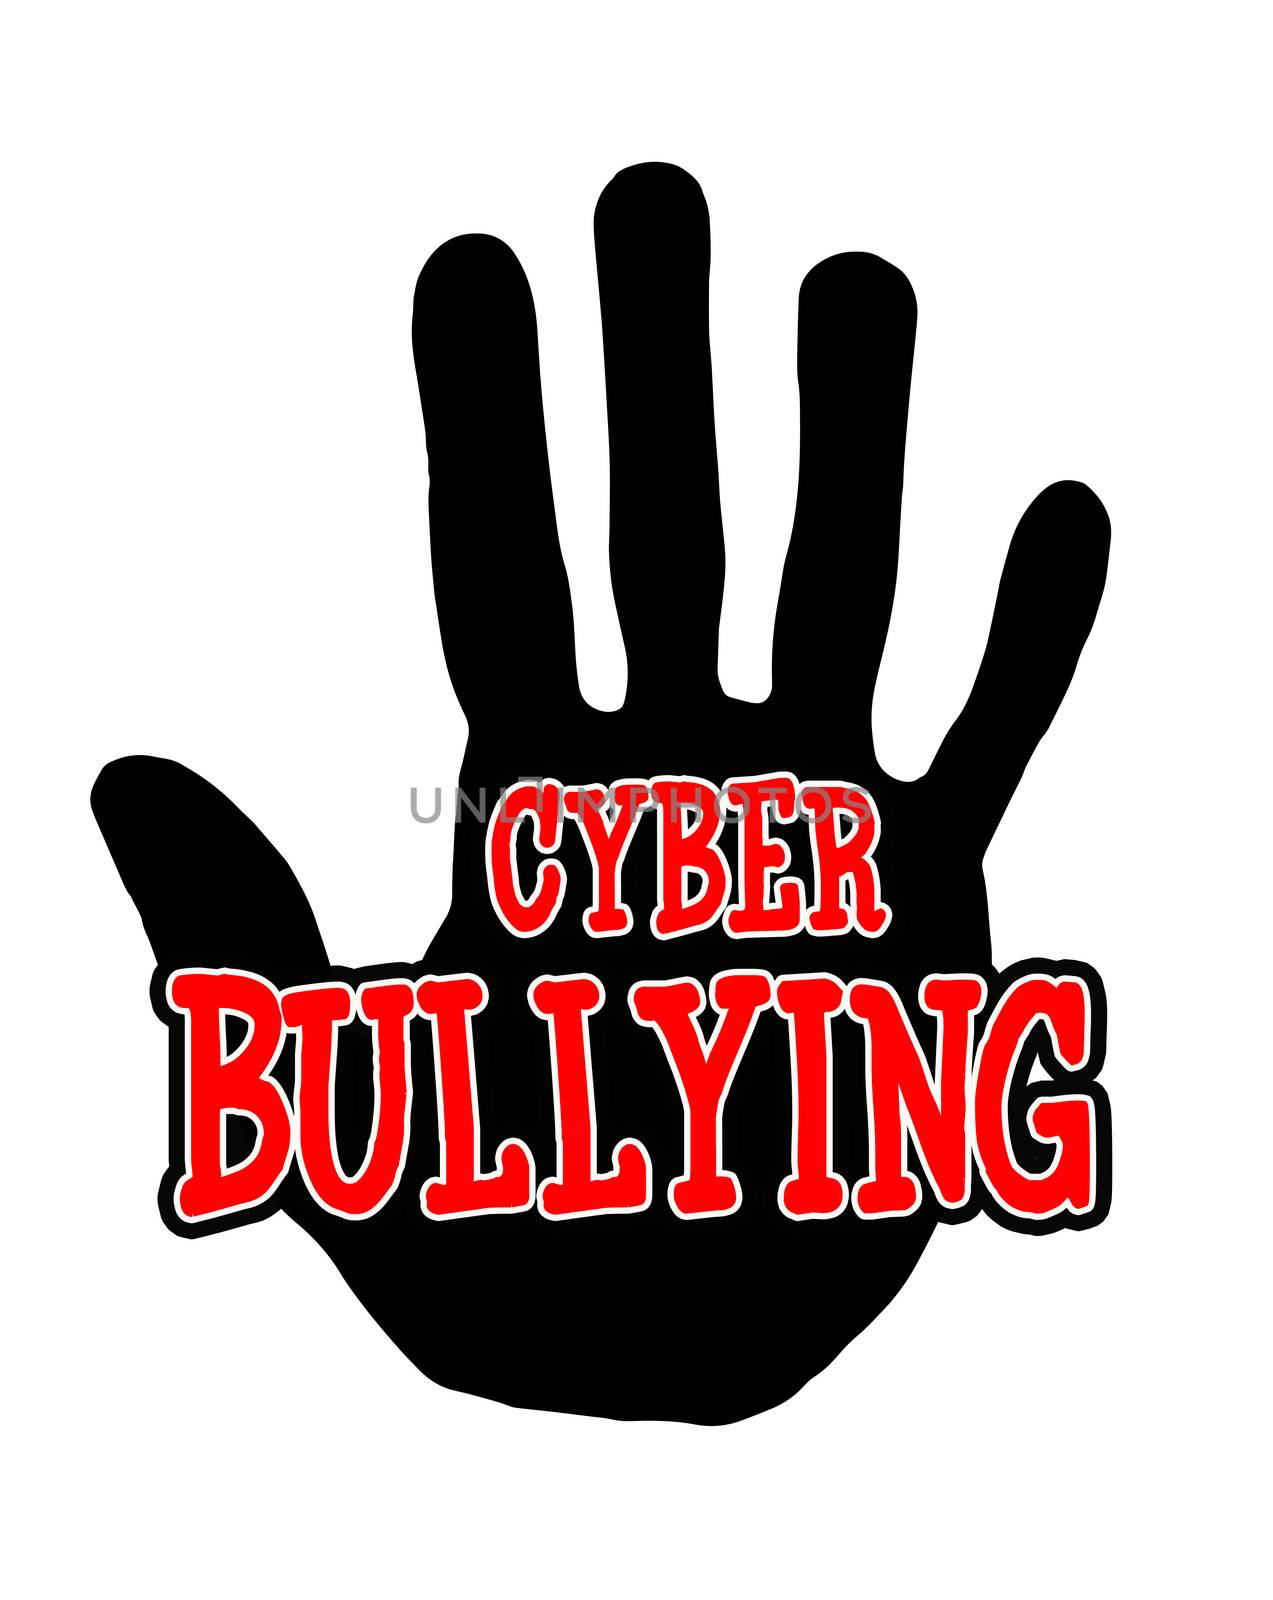 Handprint cyberbullying by Milovan